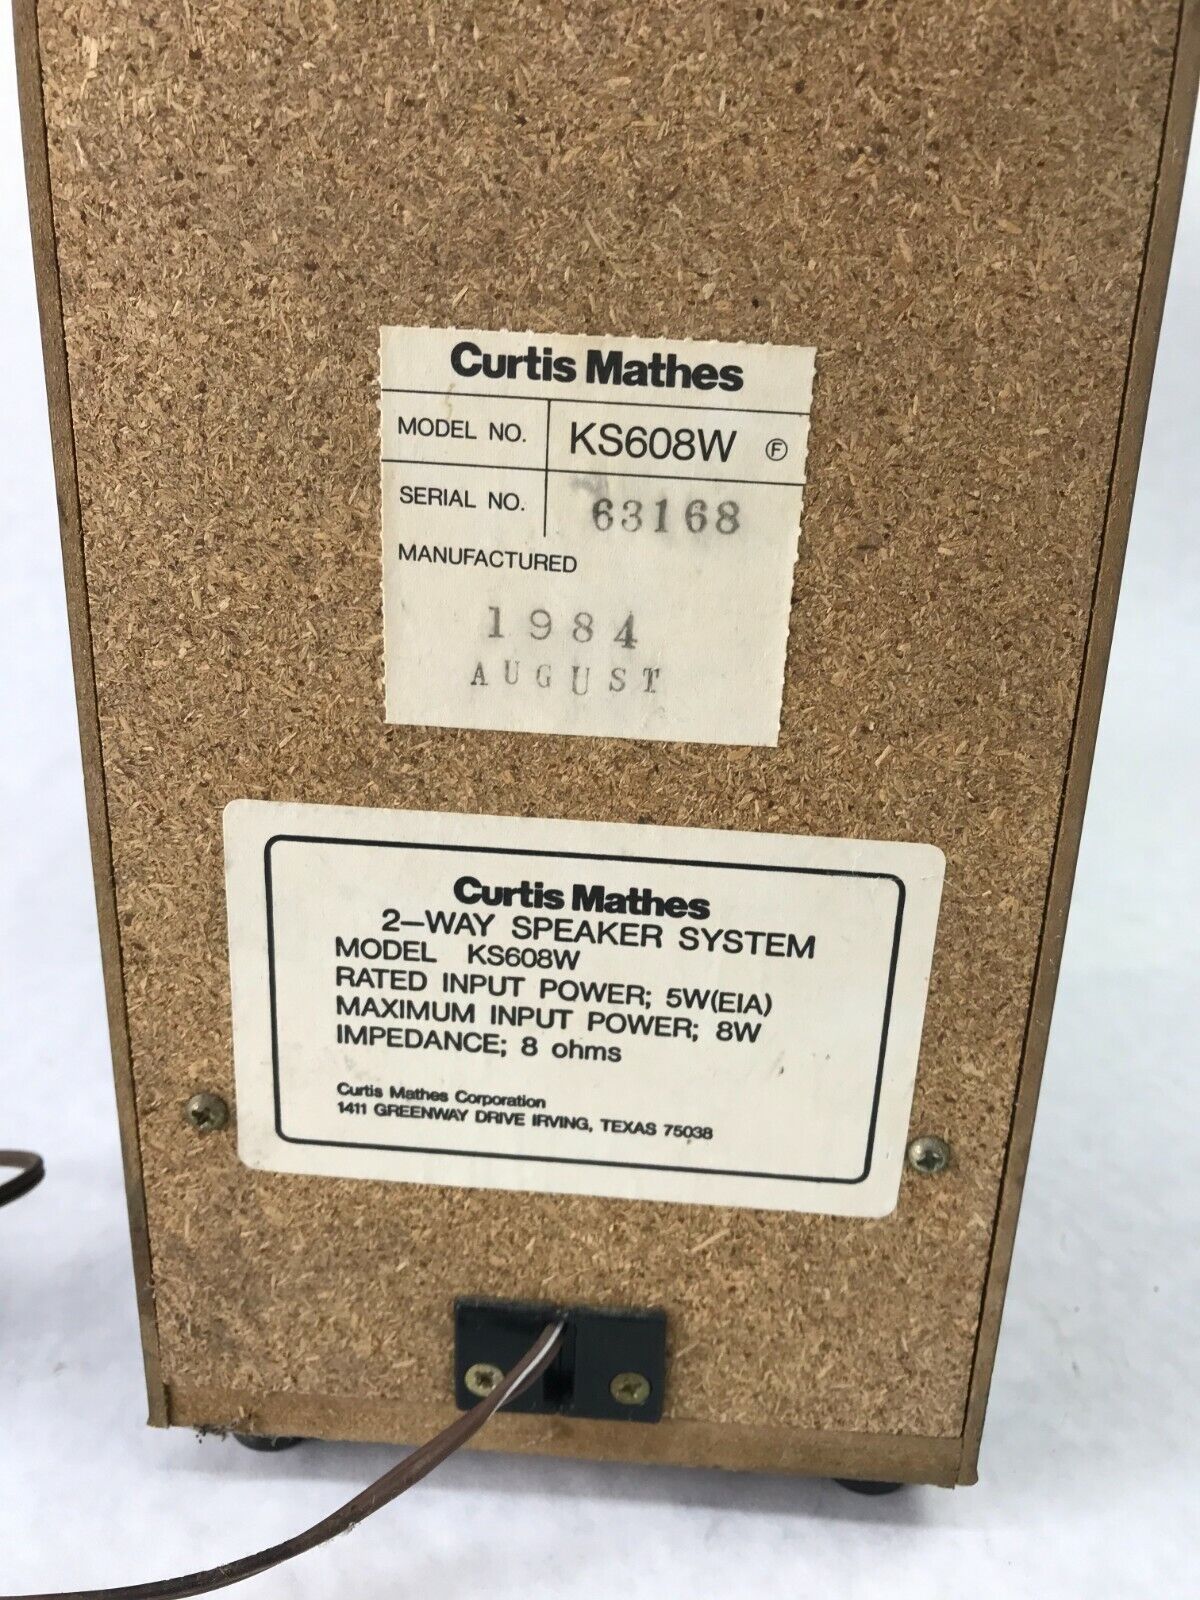 Curtis Mathes KS608W 2 Way Speaker - Tested